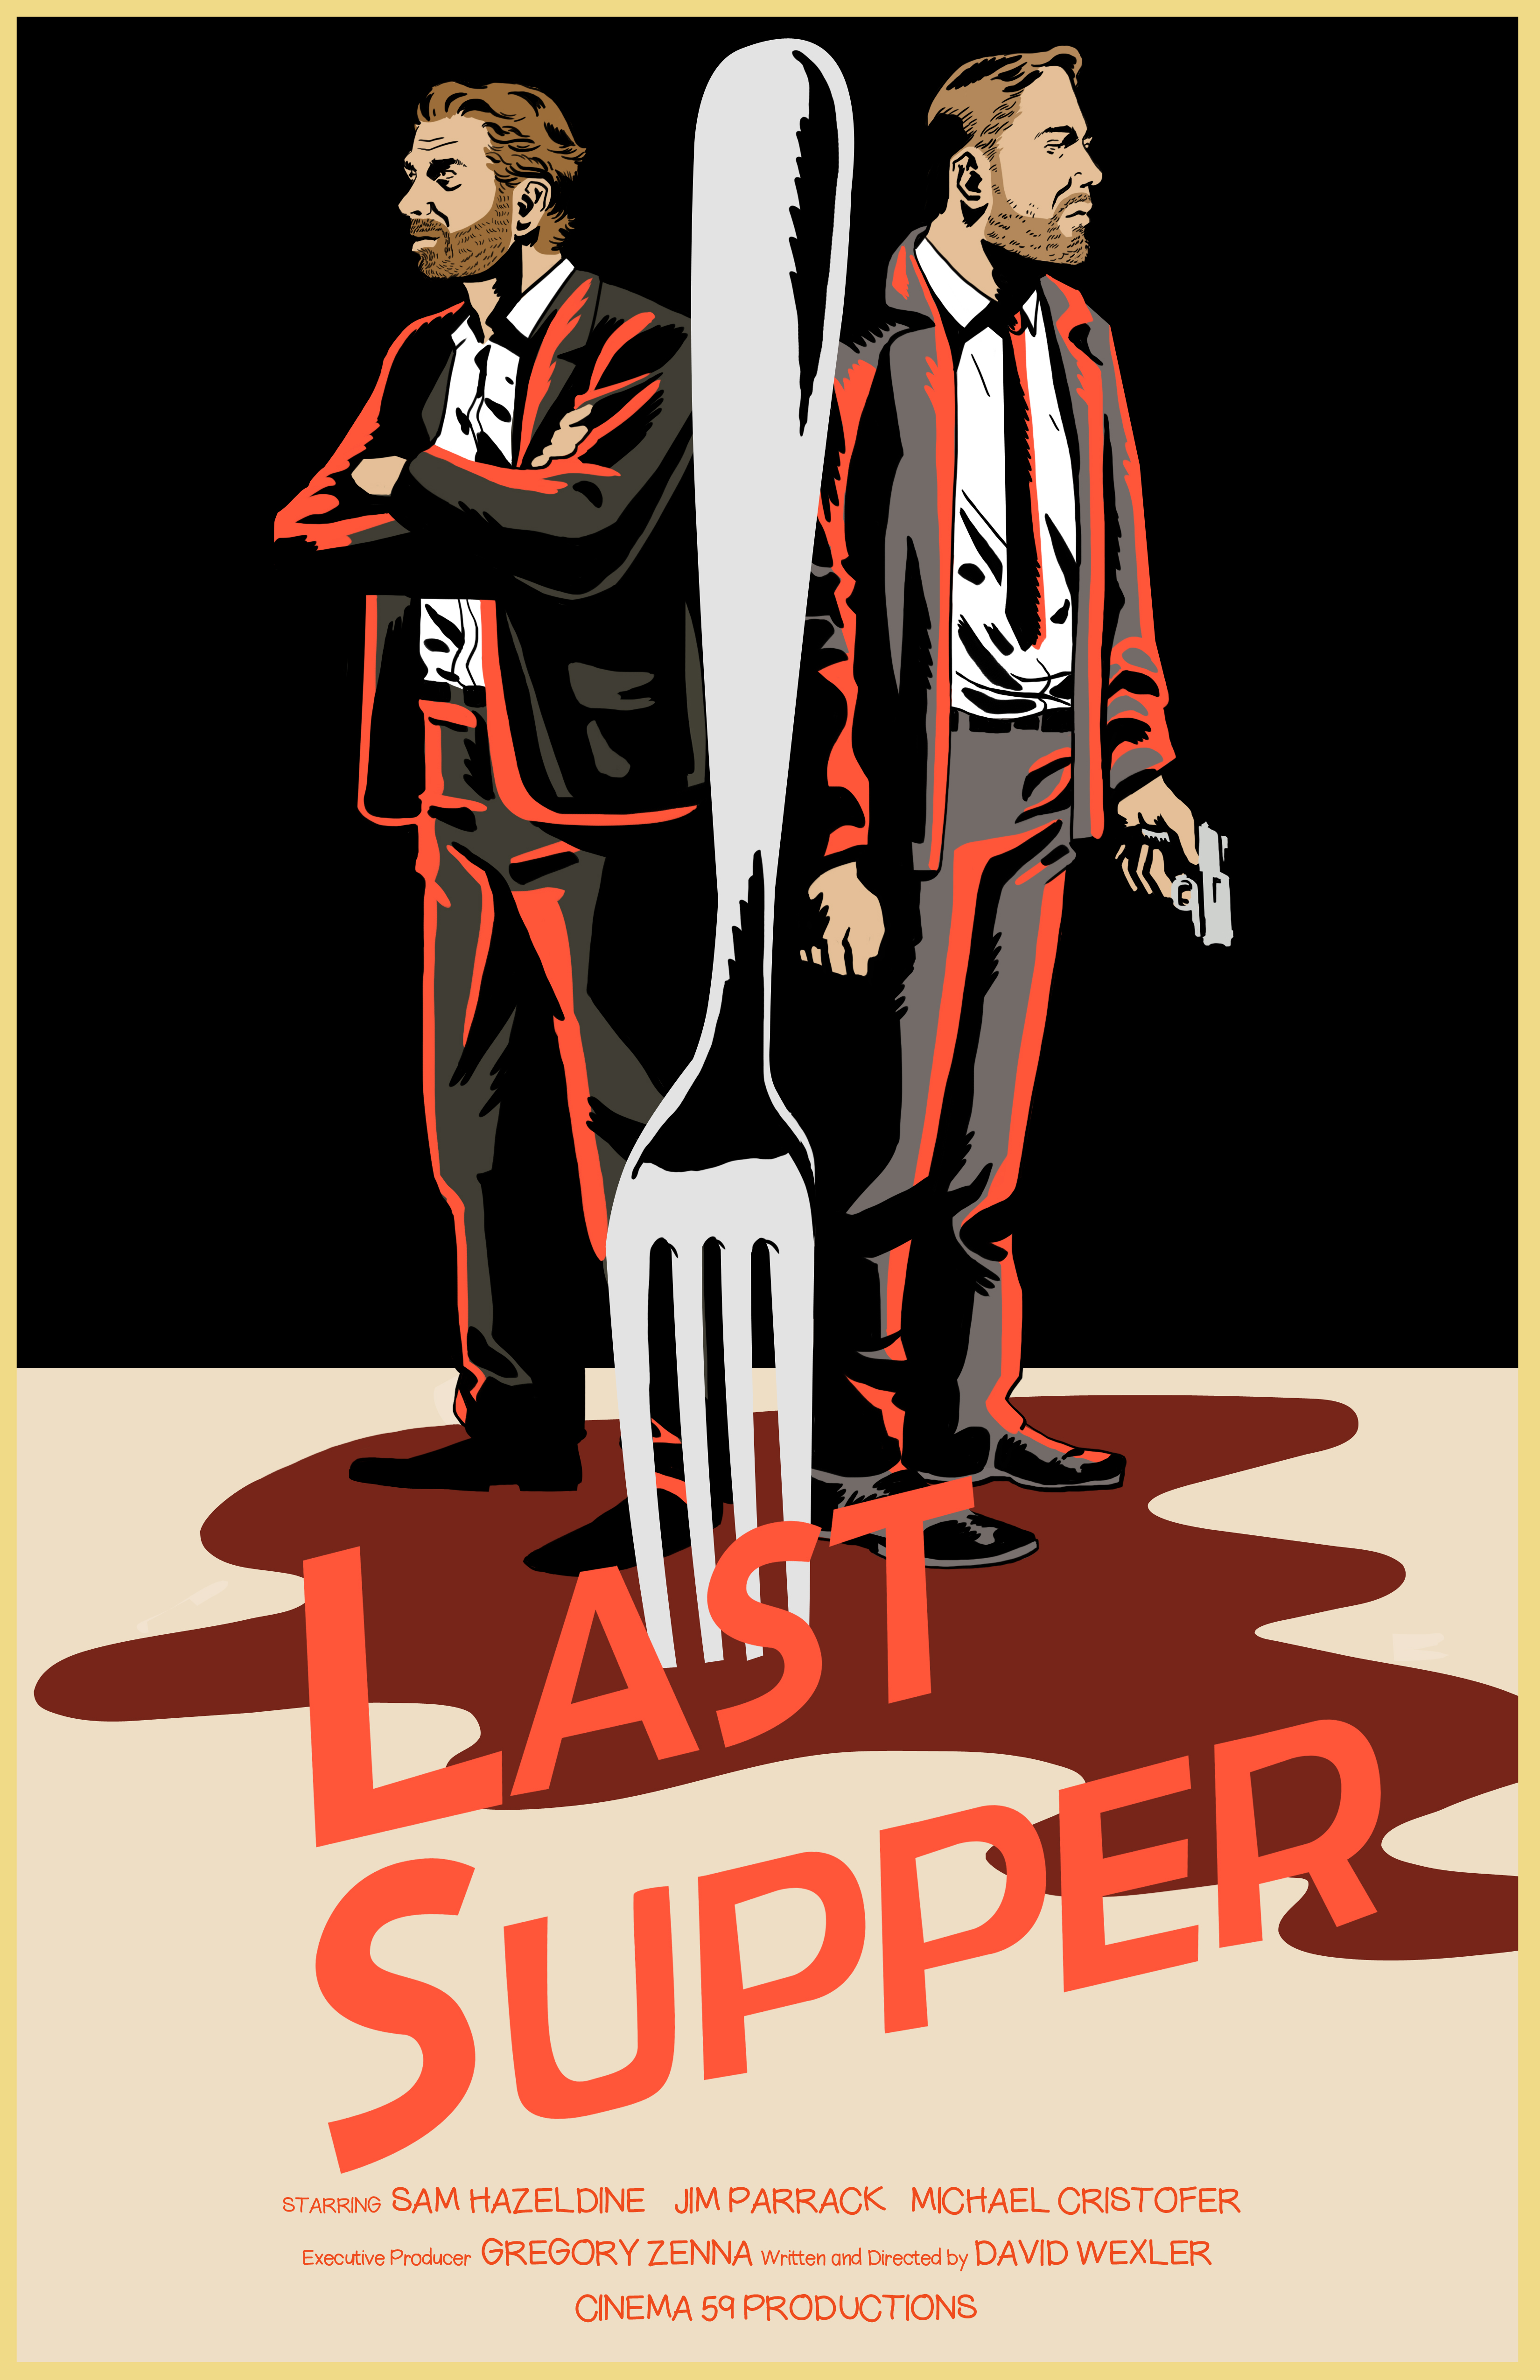 Nonton film Last Supper layarkaca21 indoxx1 ganool online streaming terbaru